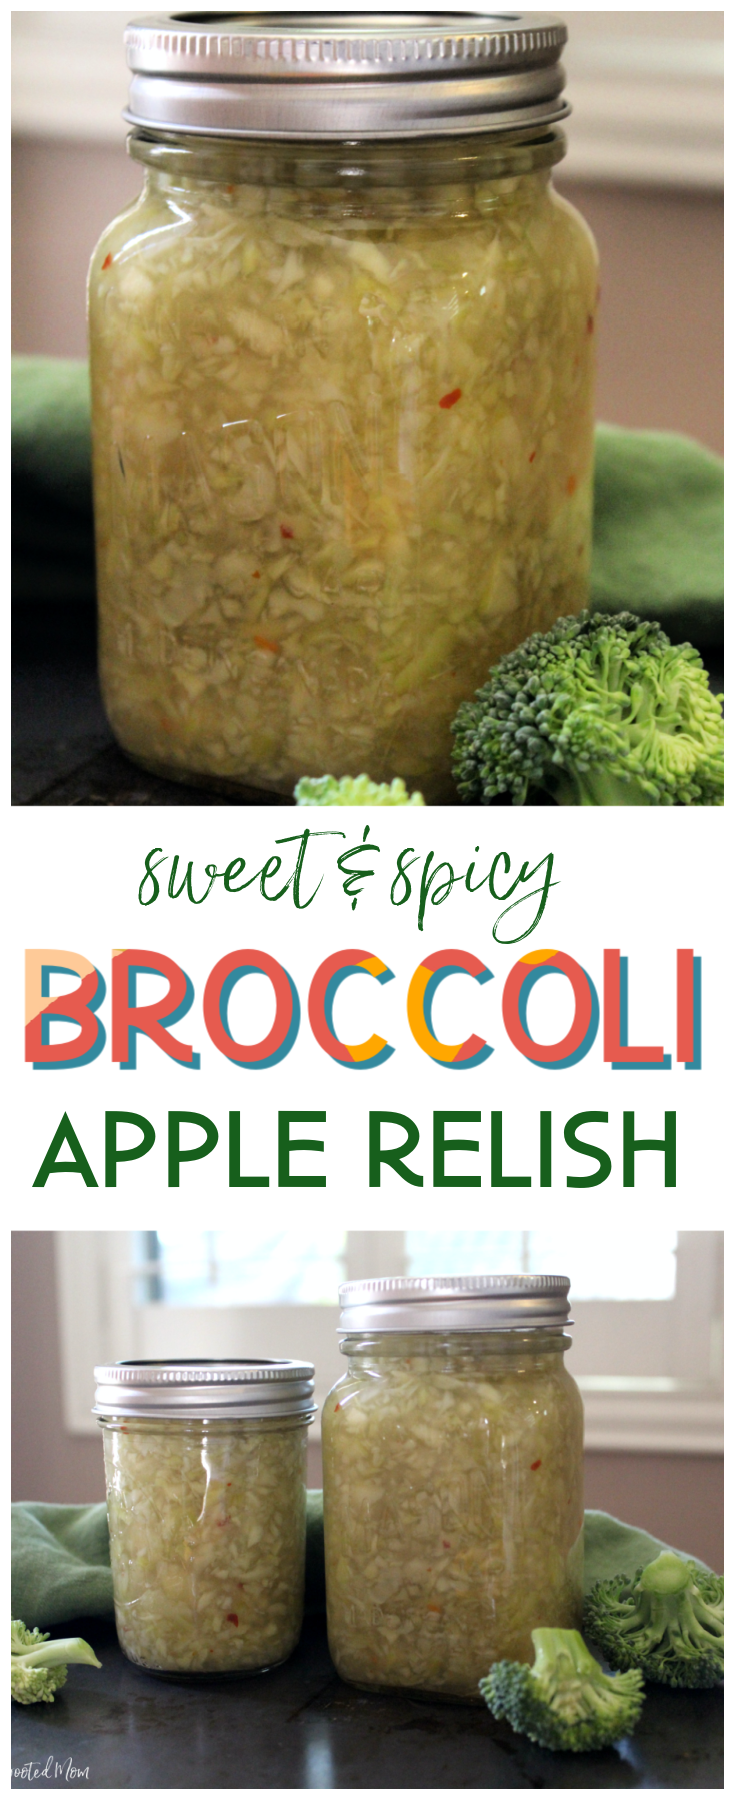 Broccoli Apple Relish